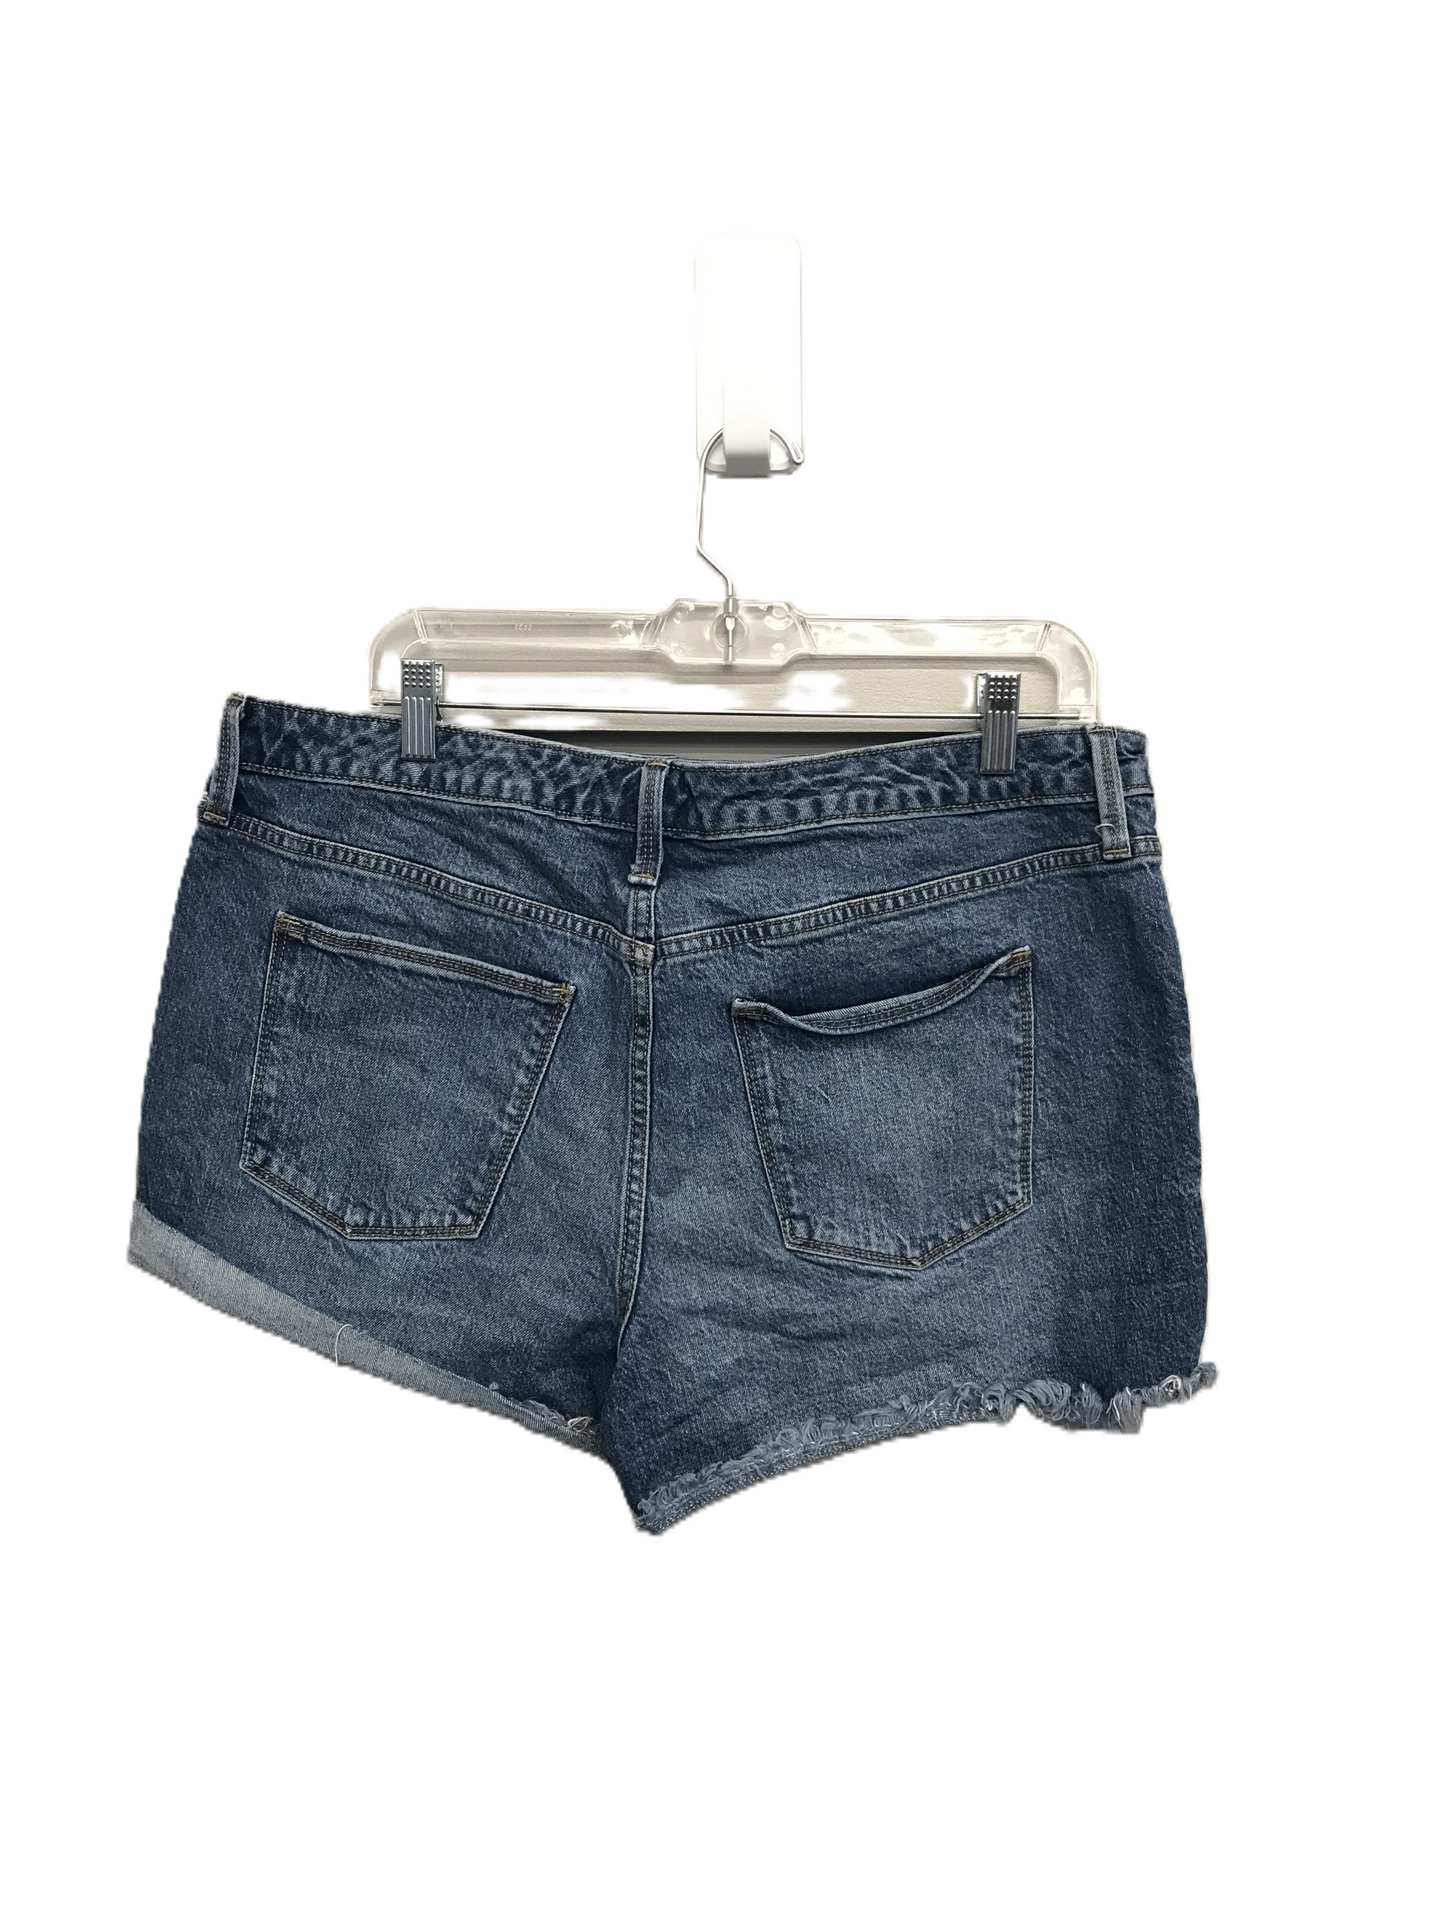 Blue Denim Shorts By Universal Thread, Size: 16